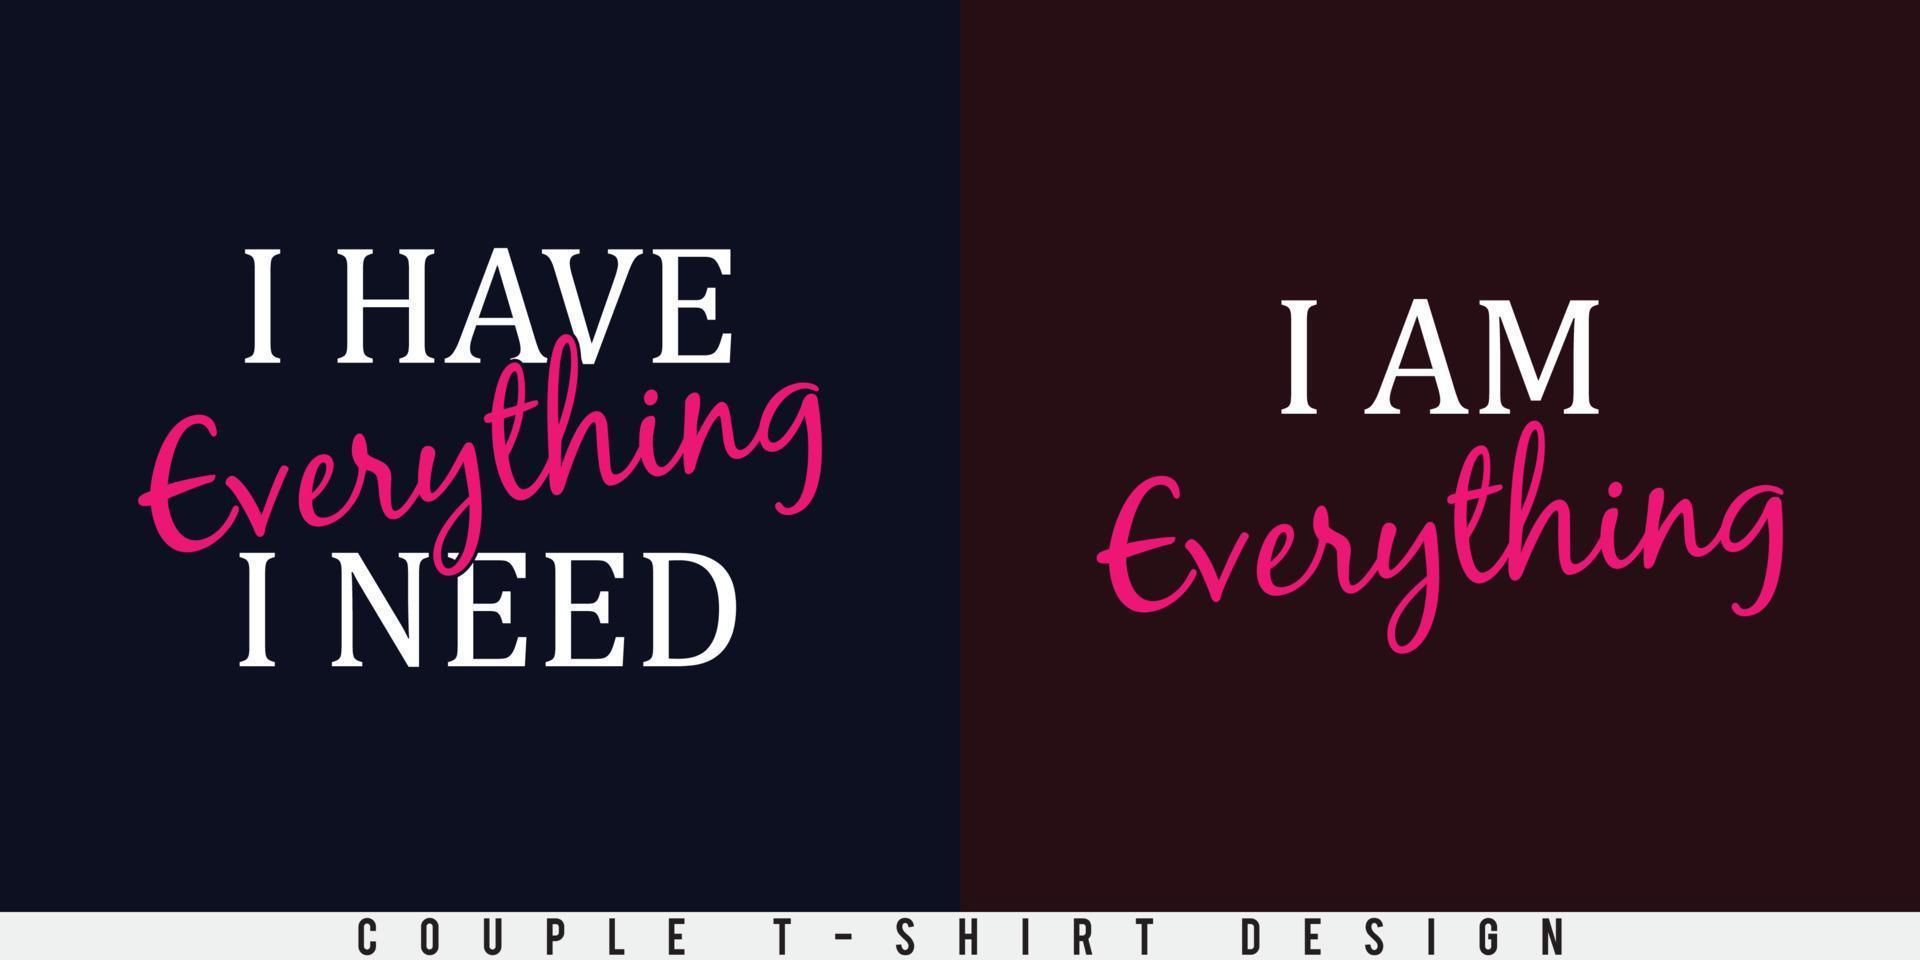 Couple t-shirt design. I have everything I need. I am everything. vector